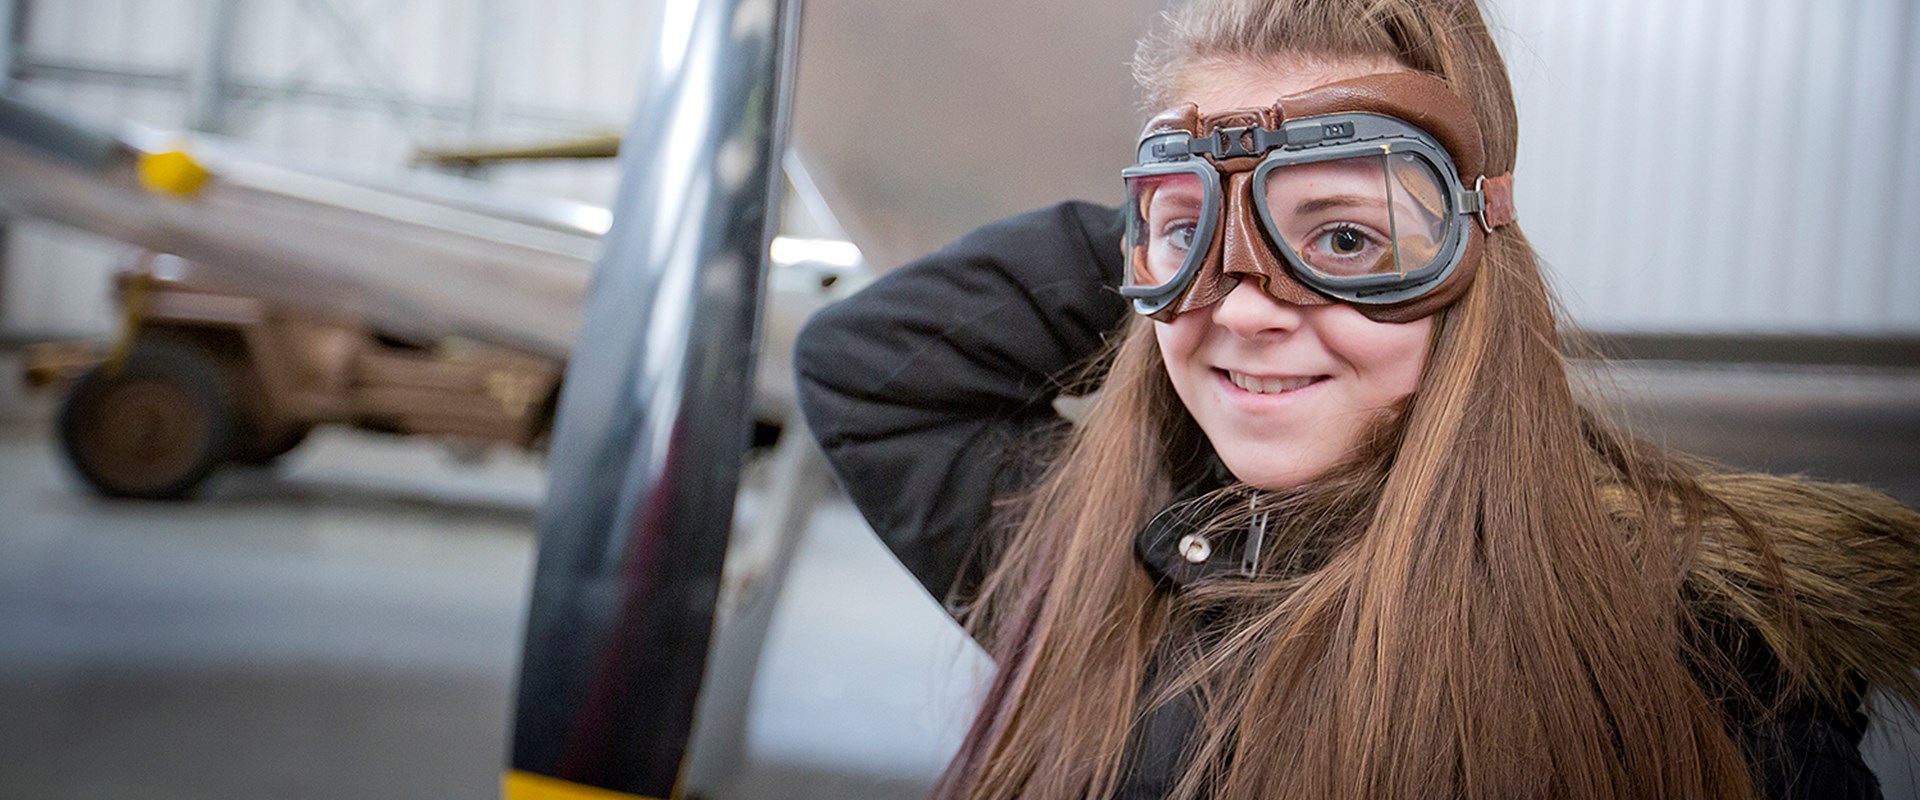 2015 NMoF girl in flight goggles